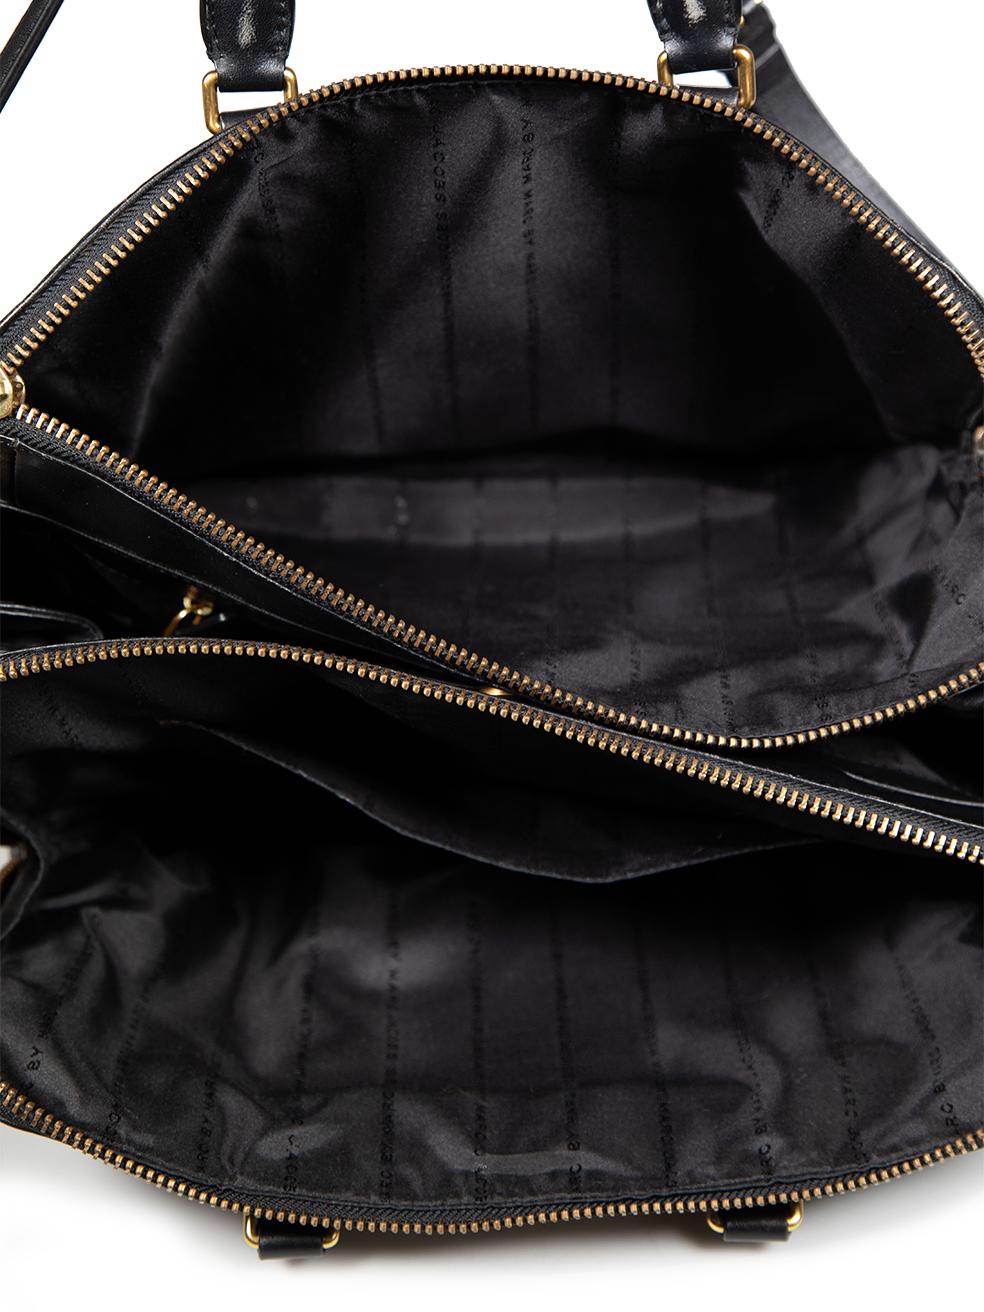 Marc Jacobs Marc By Marc Jacobs Black Leather Medium Handbag For Sale 1